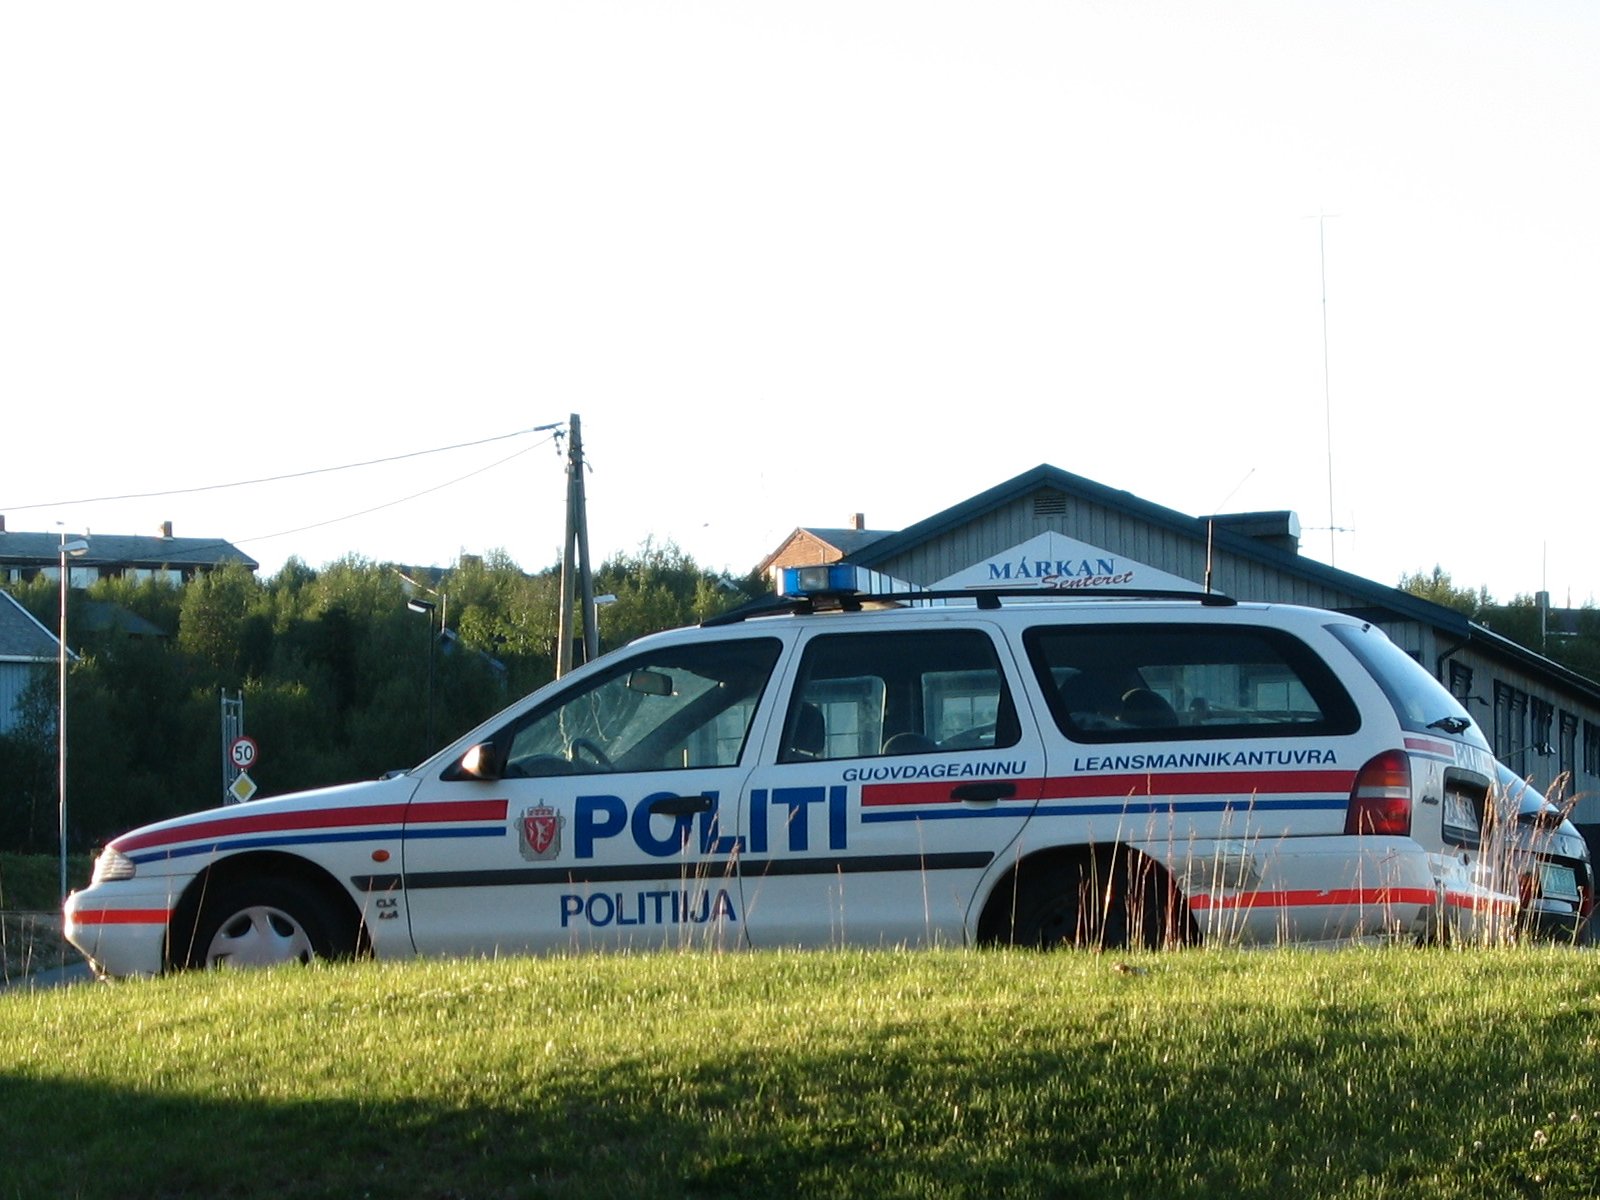 Ford Mondeo CLX 4x4  Turnier Polizei